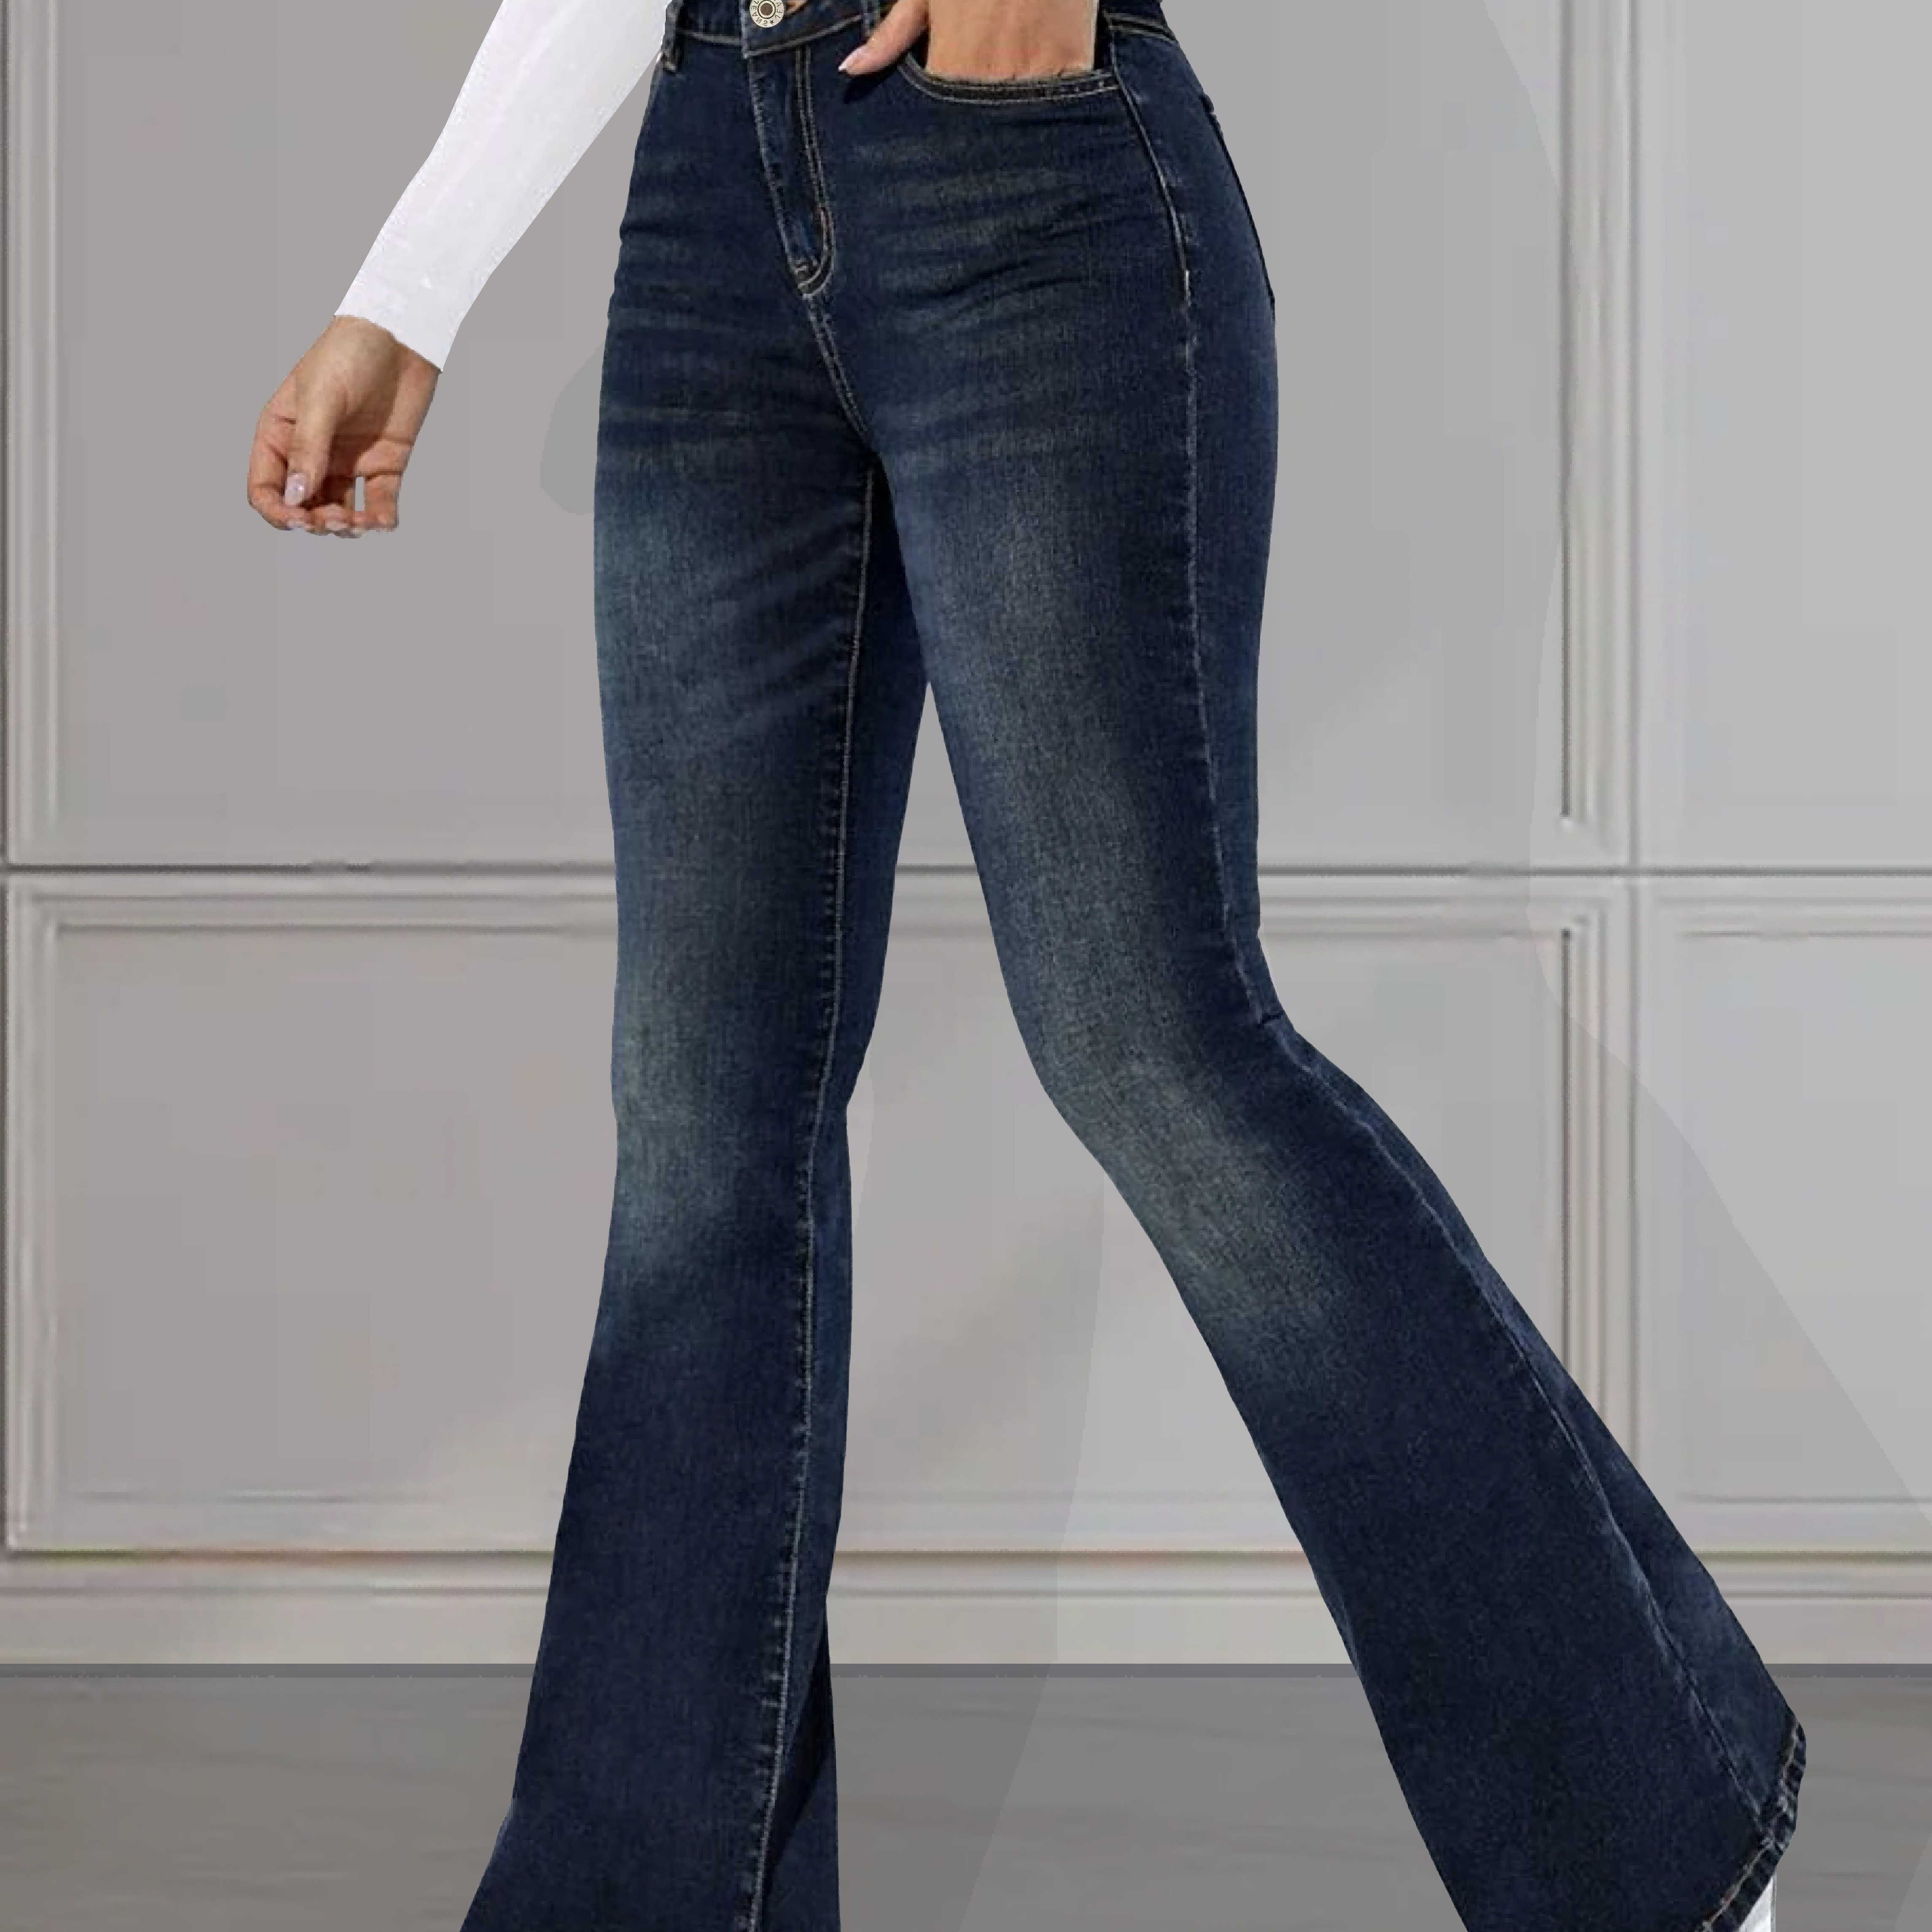 

High Stretch Casual Flare Jeans, Slant Pockets Versatile Bell Bottom Jeans, Women's Denim Jeans & Clothing